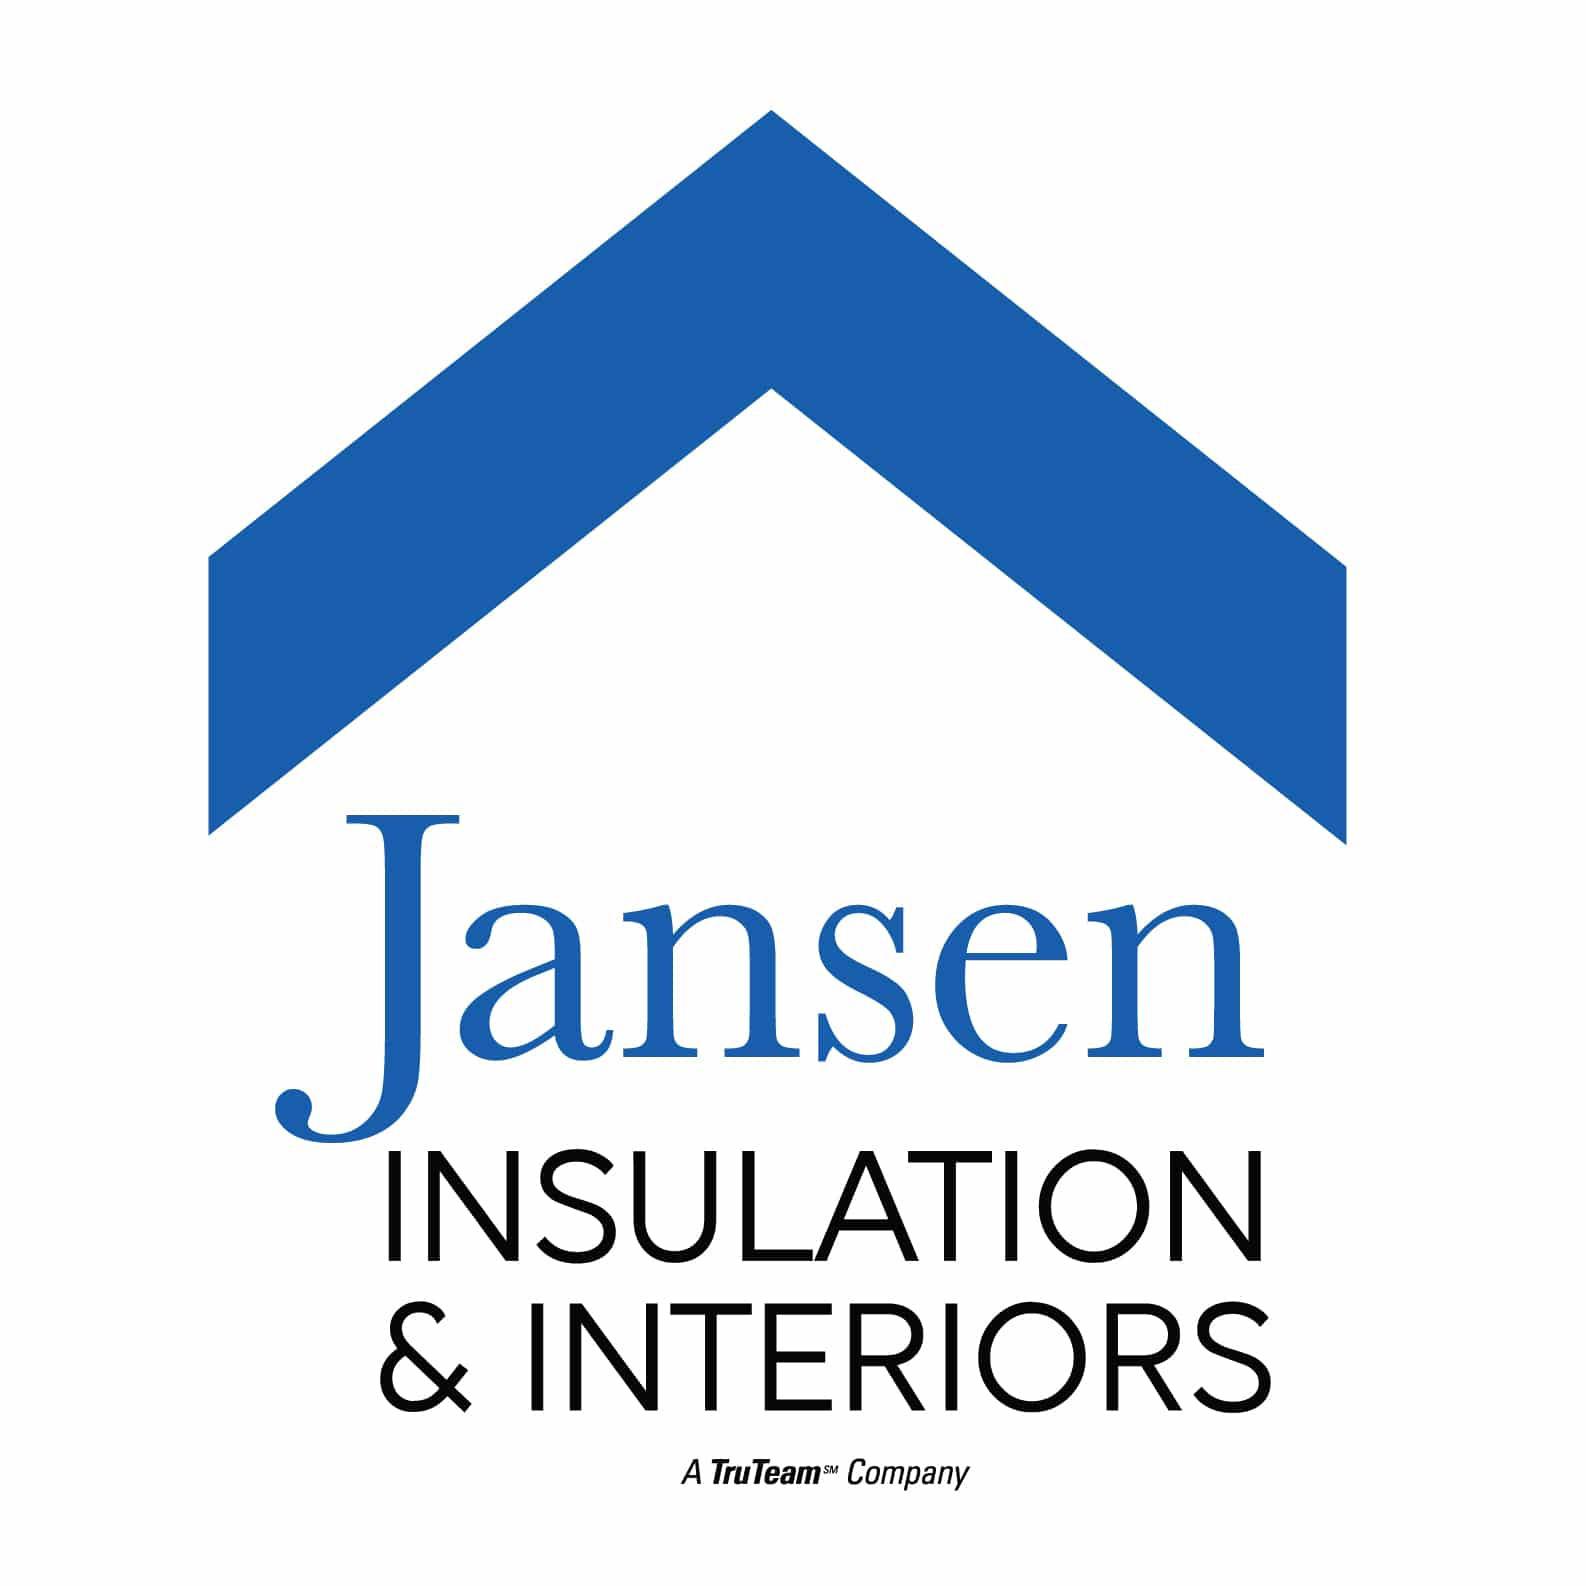 Jansen Insulation and Interiors